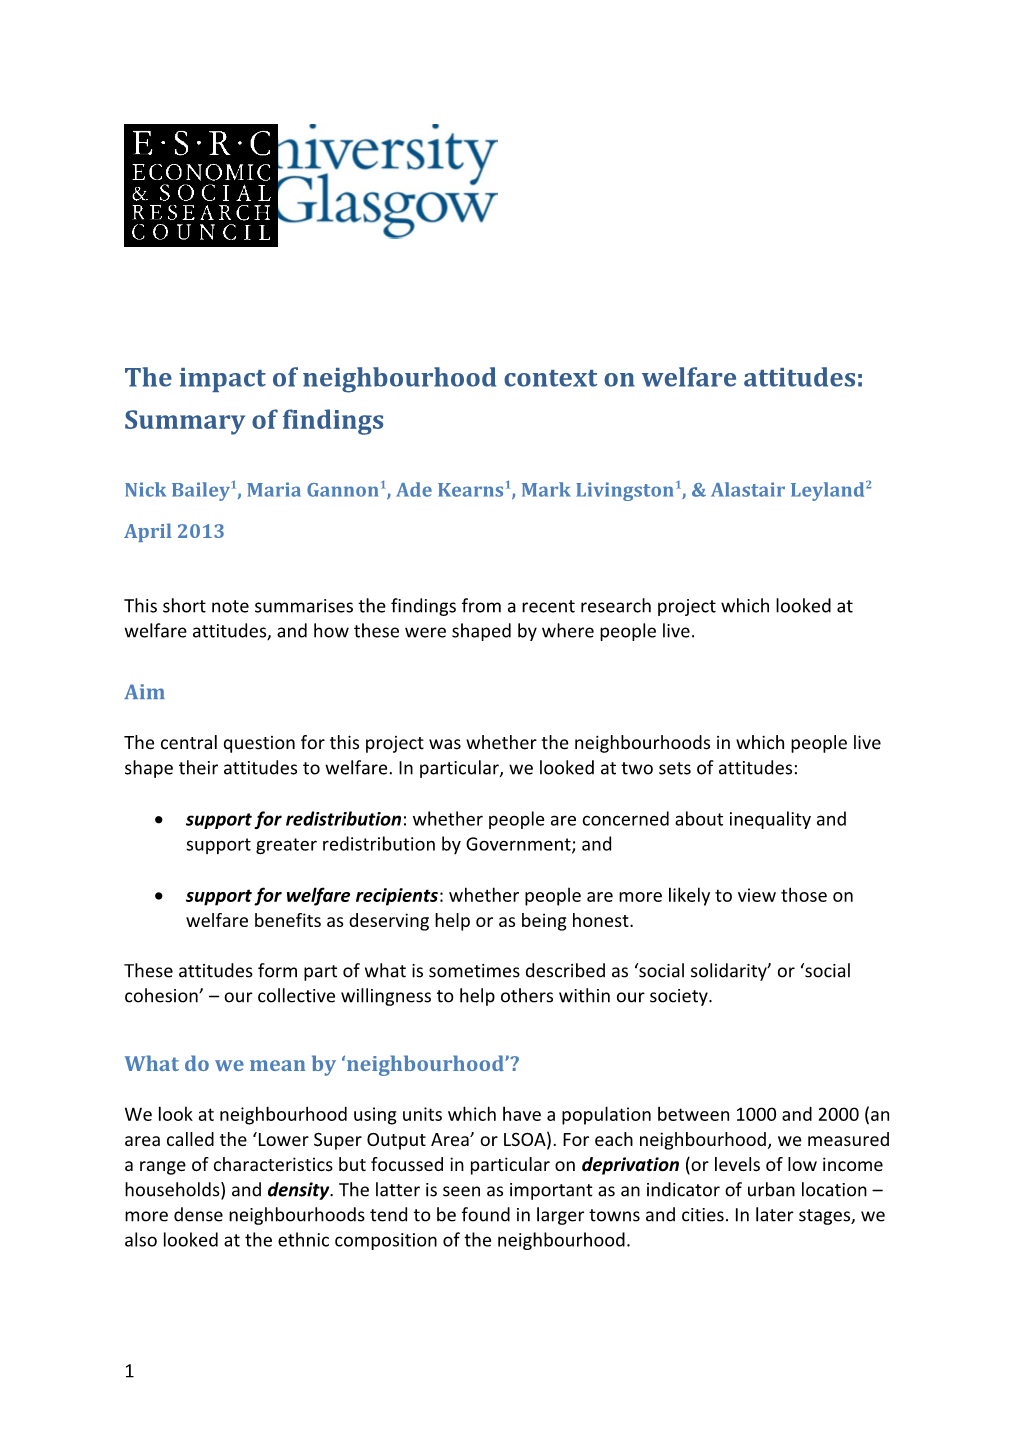 The Impact of Neighbourhood Context on Welfare Attitudes